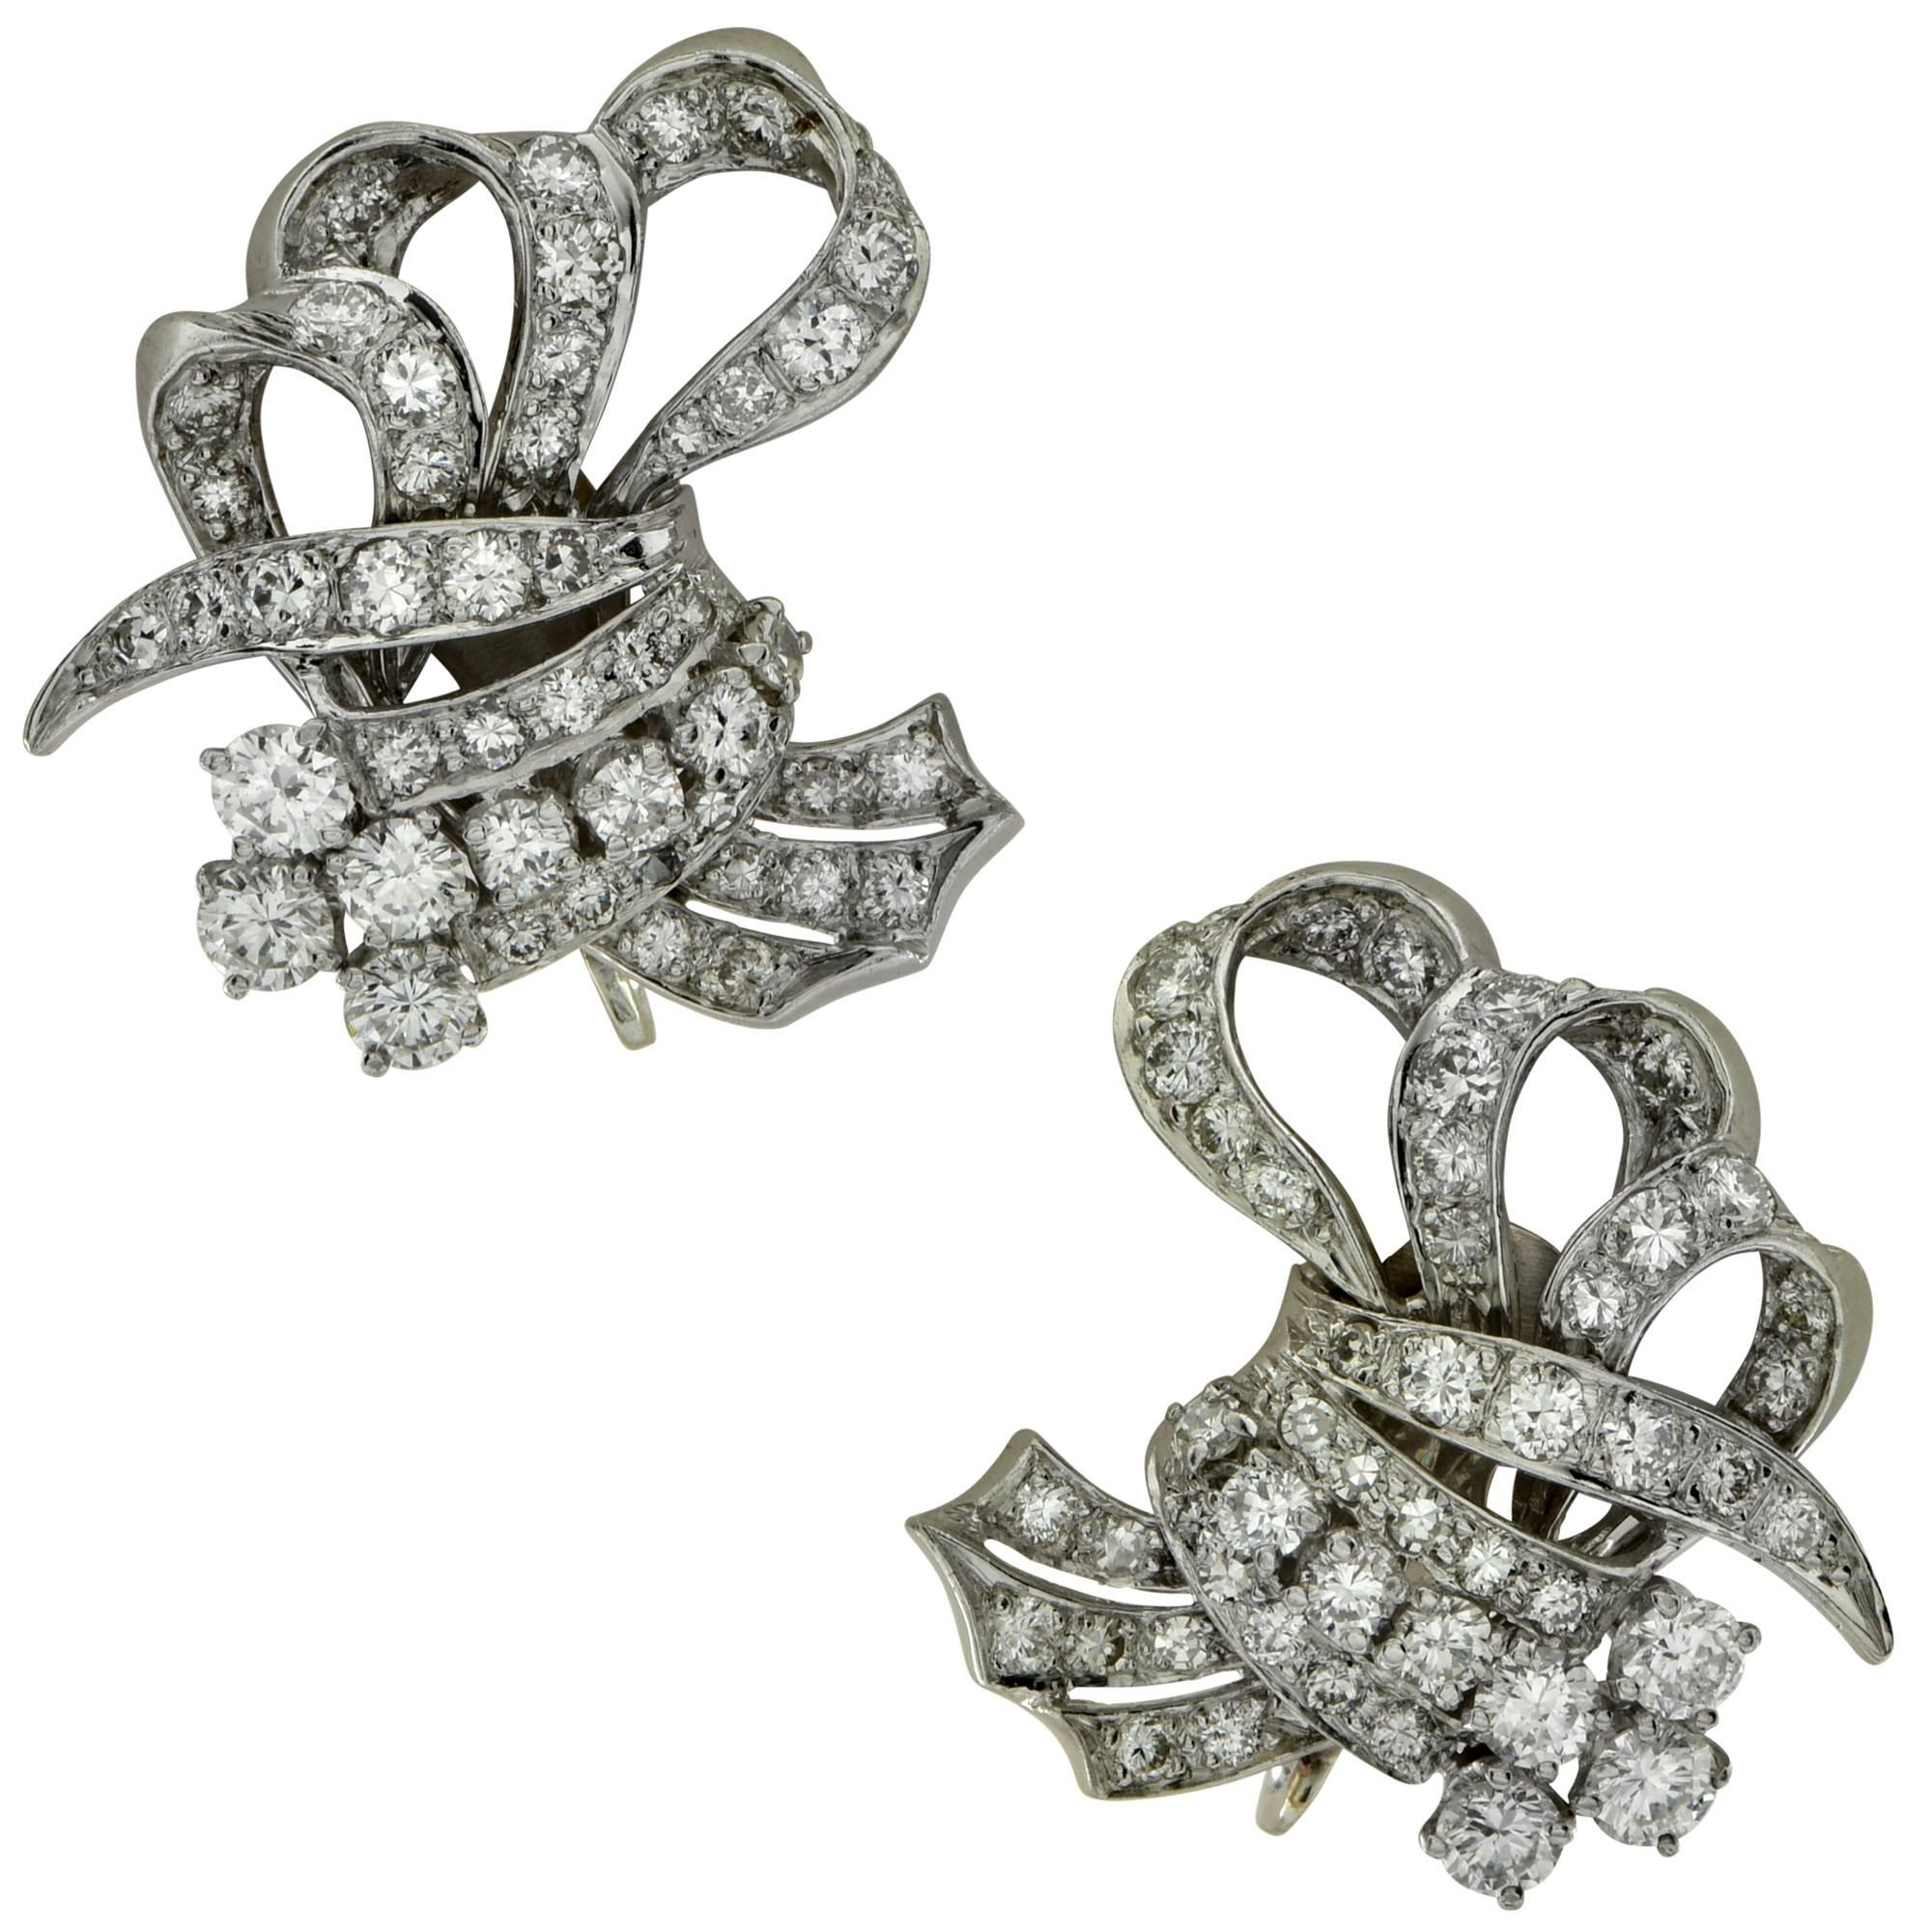 5 Carat Diamond Earrings